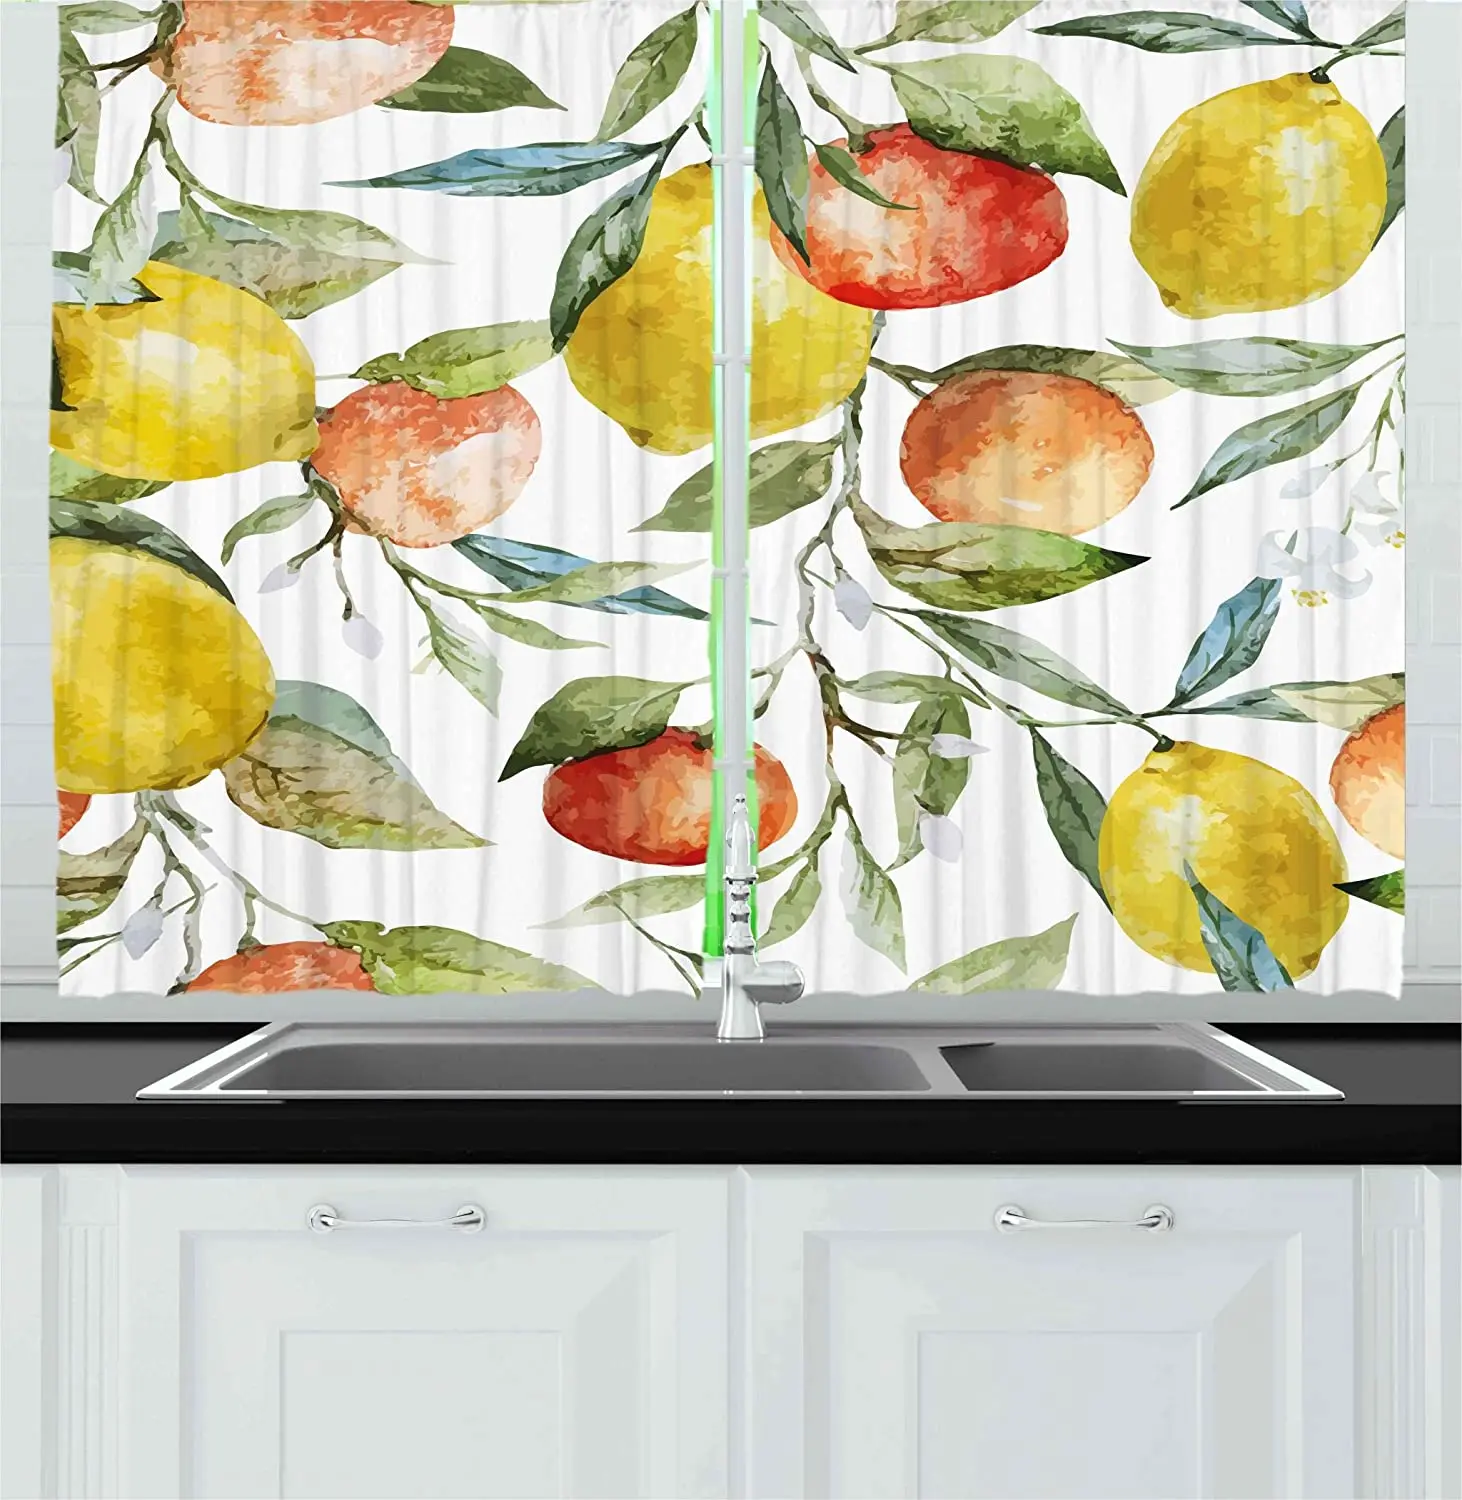 

Lemon and Orange Clementine Tree Branches Fruit Yummy Winter Season Vitamin Design Window Drapes Blackout Curtains for Kitchen